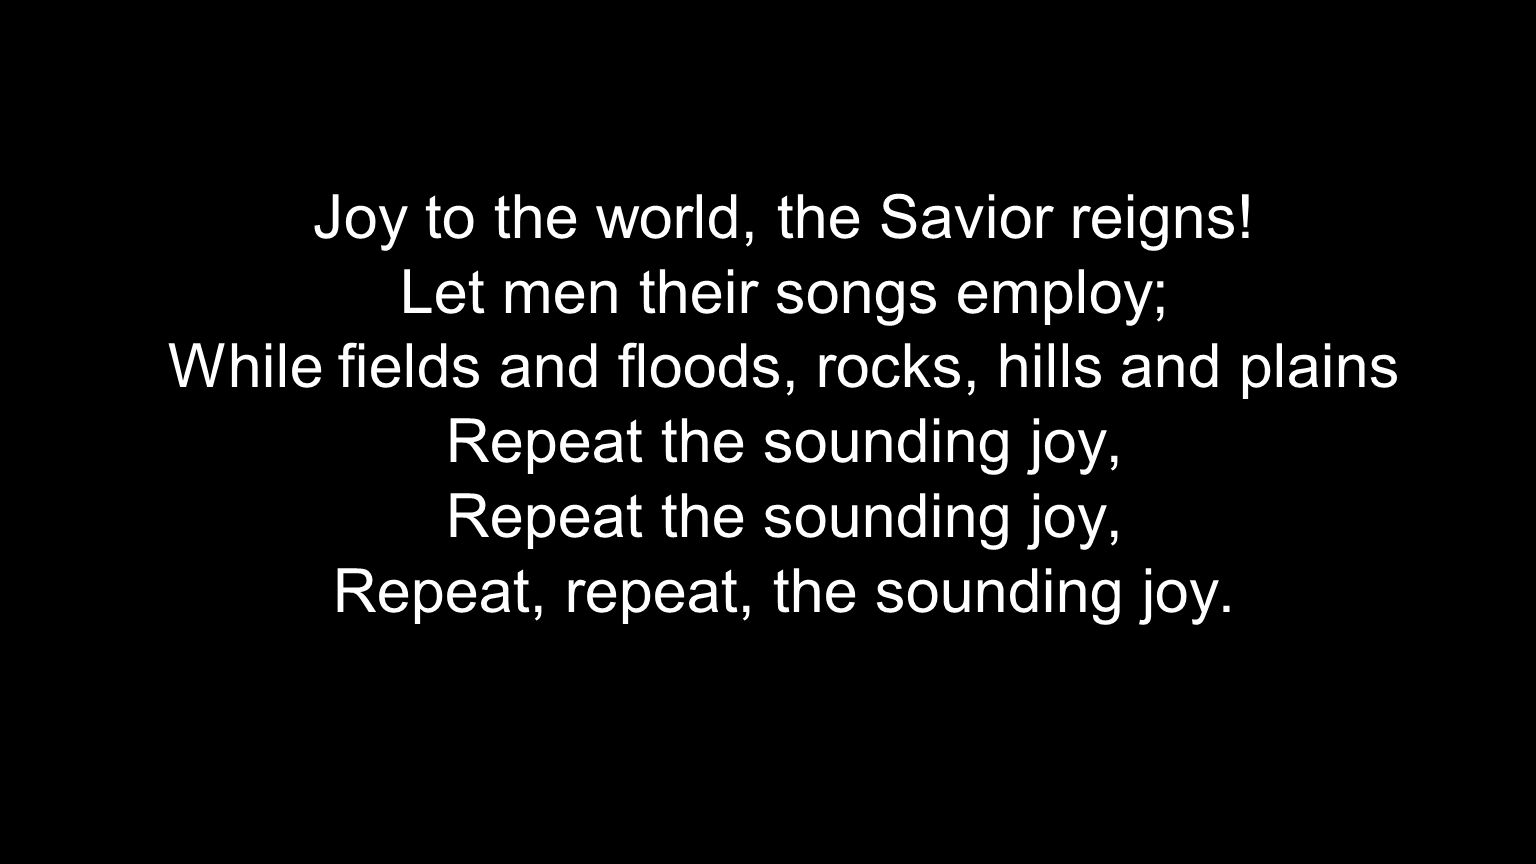 Joy to the world, the Savior reigns.